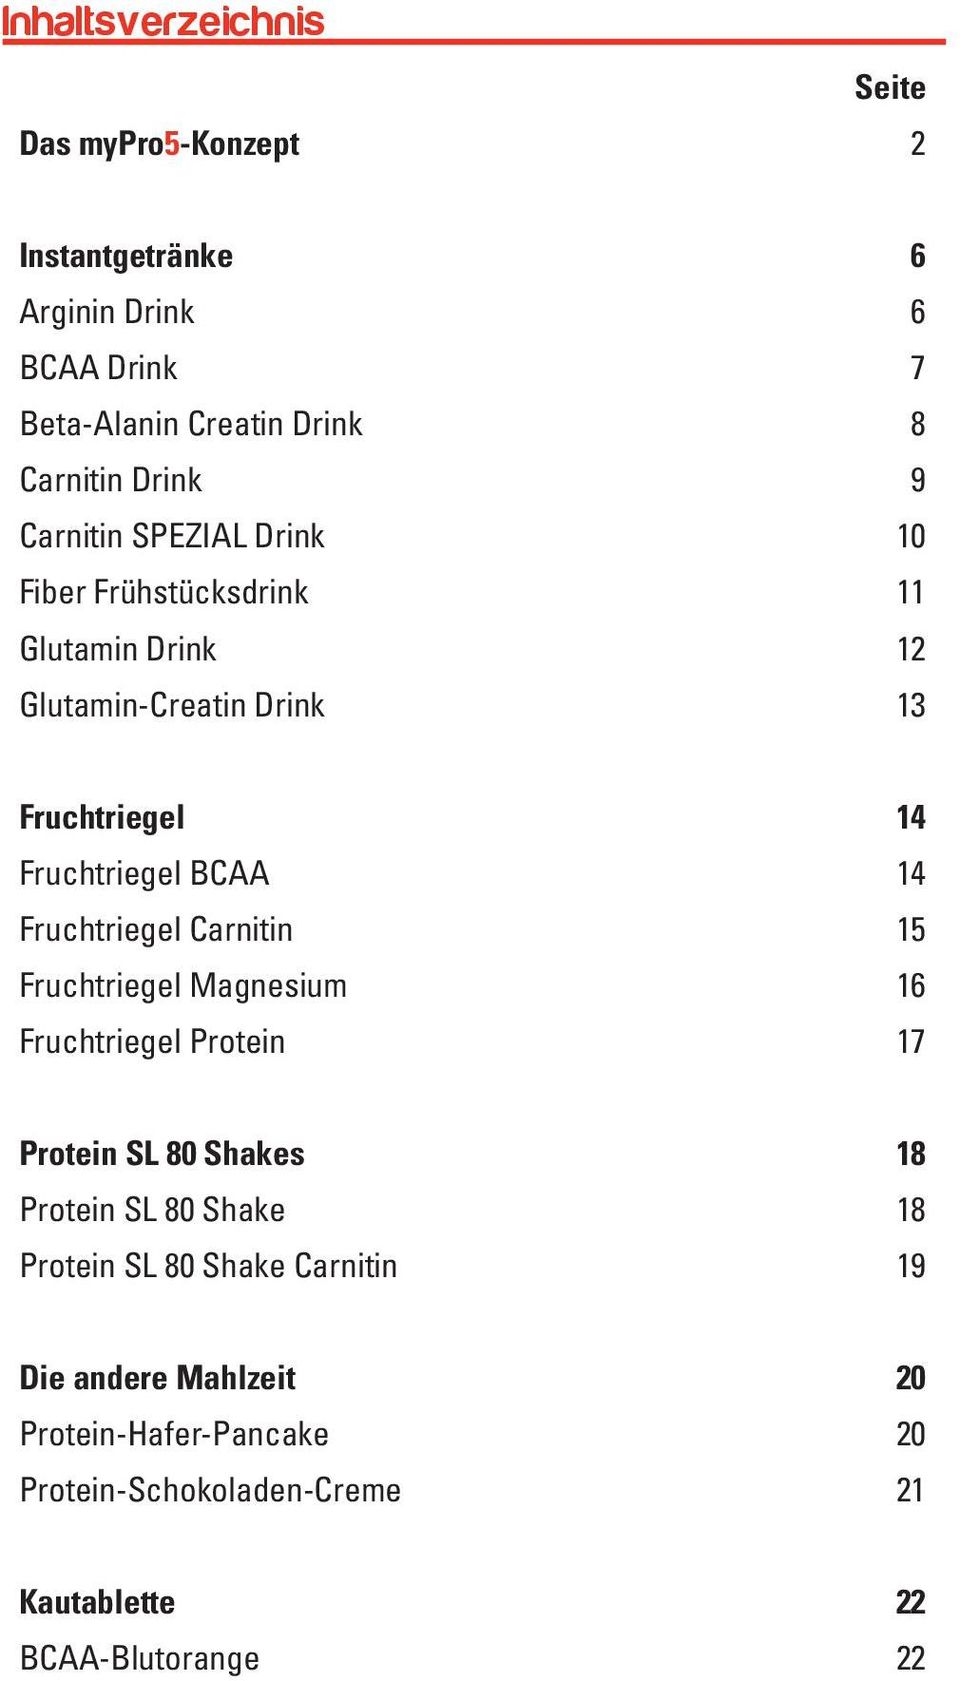 BCAA 14 Fruchtriegel Carnitin 15 Fruchtriegel Magnesium 16 Fruchtriegel Protein 17 Protein SL 80 Shakes 18 Protein SL 80 Shake 18